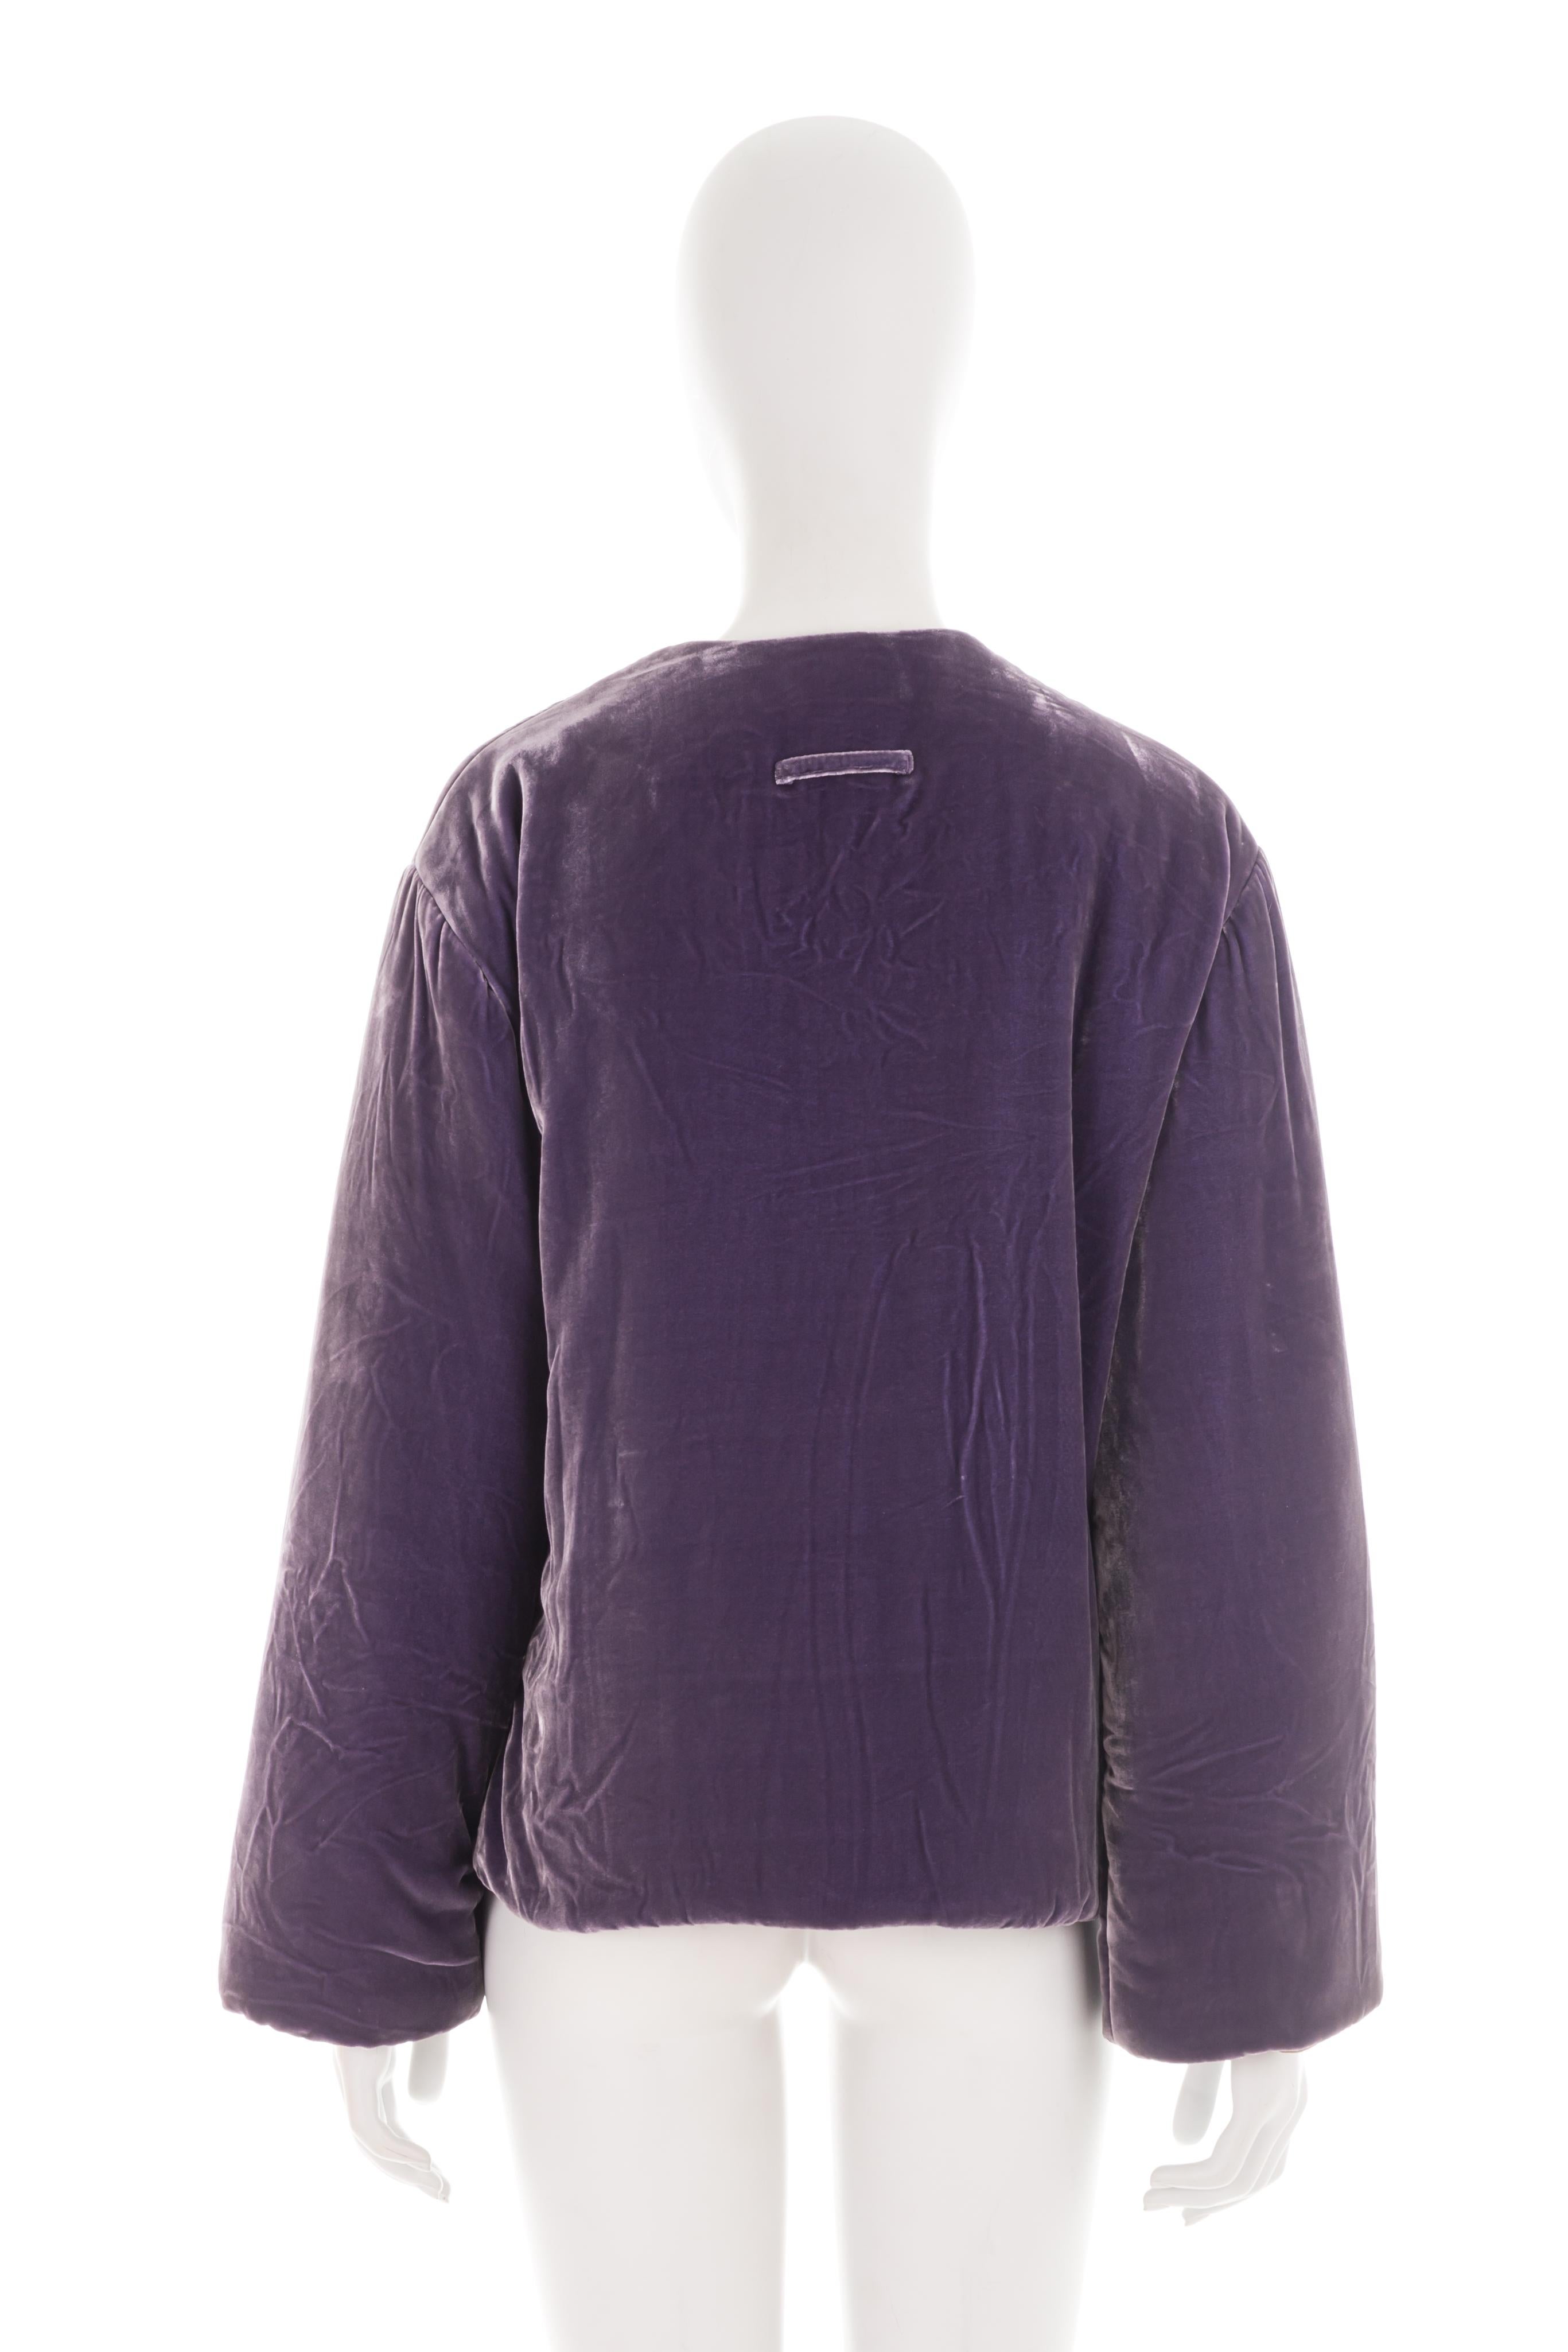 Jean Paul Gaultier F/W 2000 purple velvet bomber jacket In Good Condition For Sale In Rome, IT